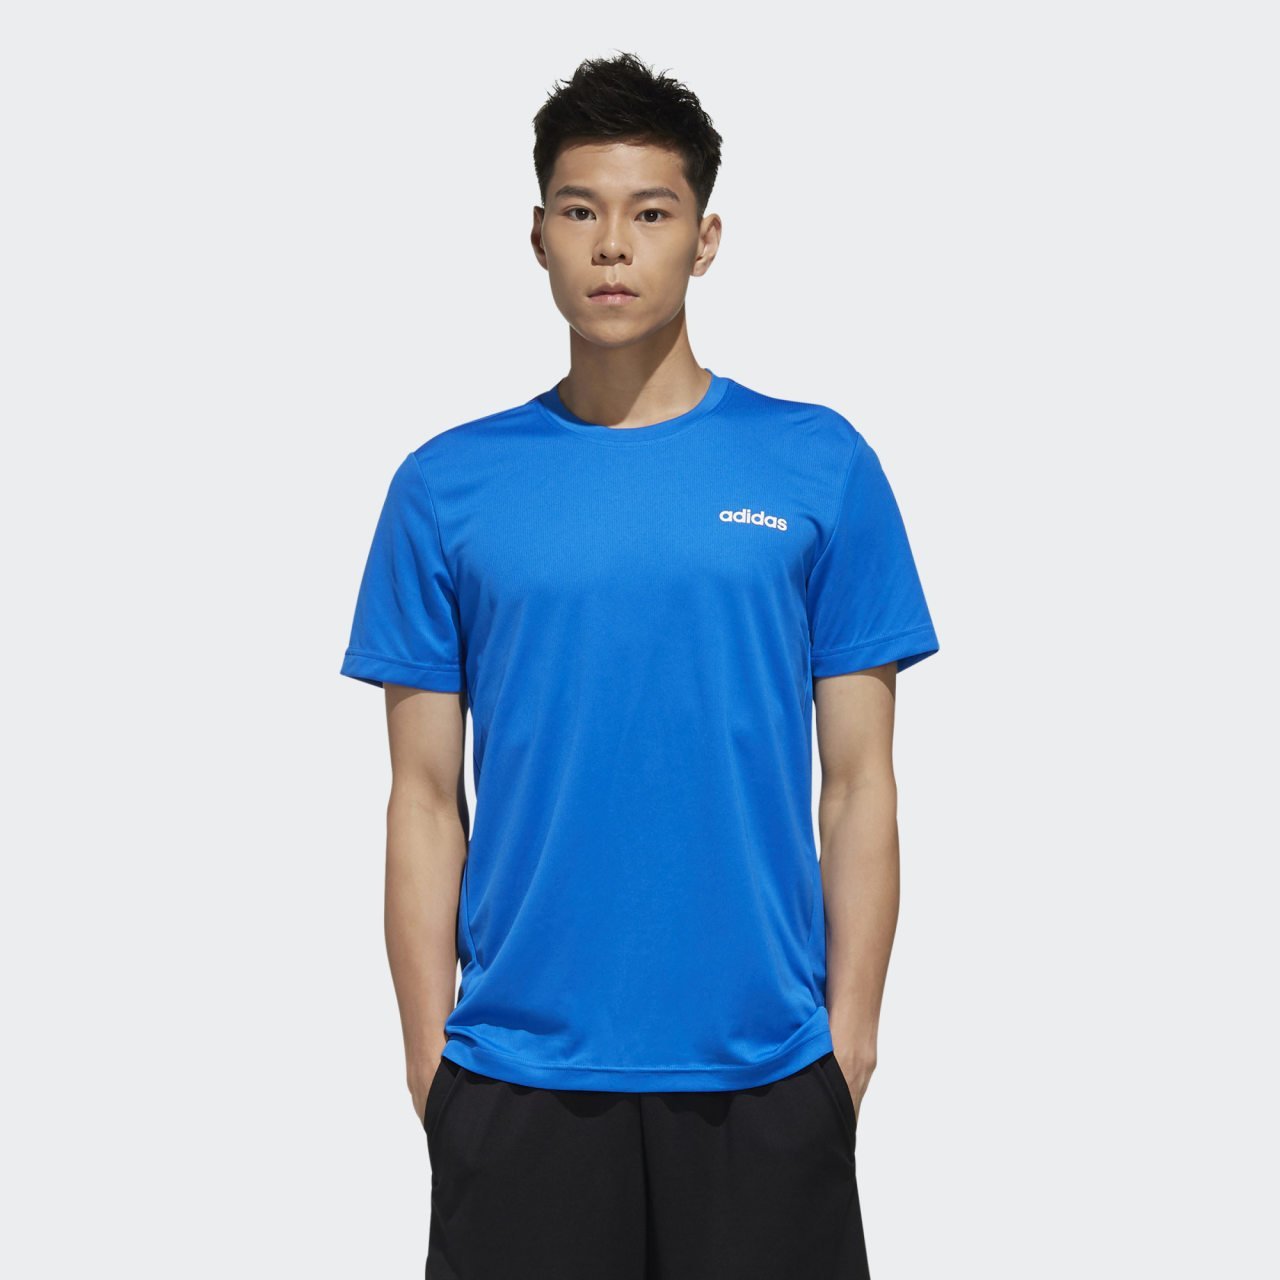 Adidas Designed 2 Move Plain Bay T-shirt